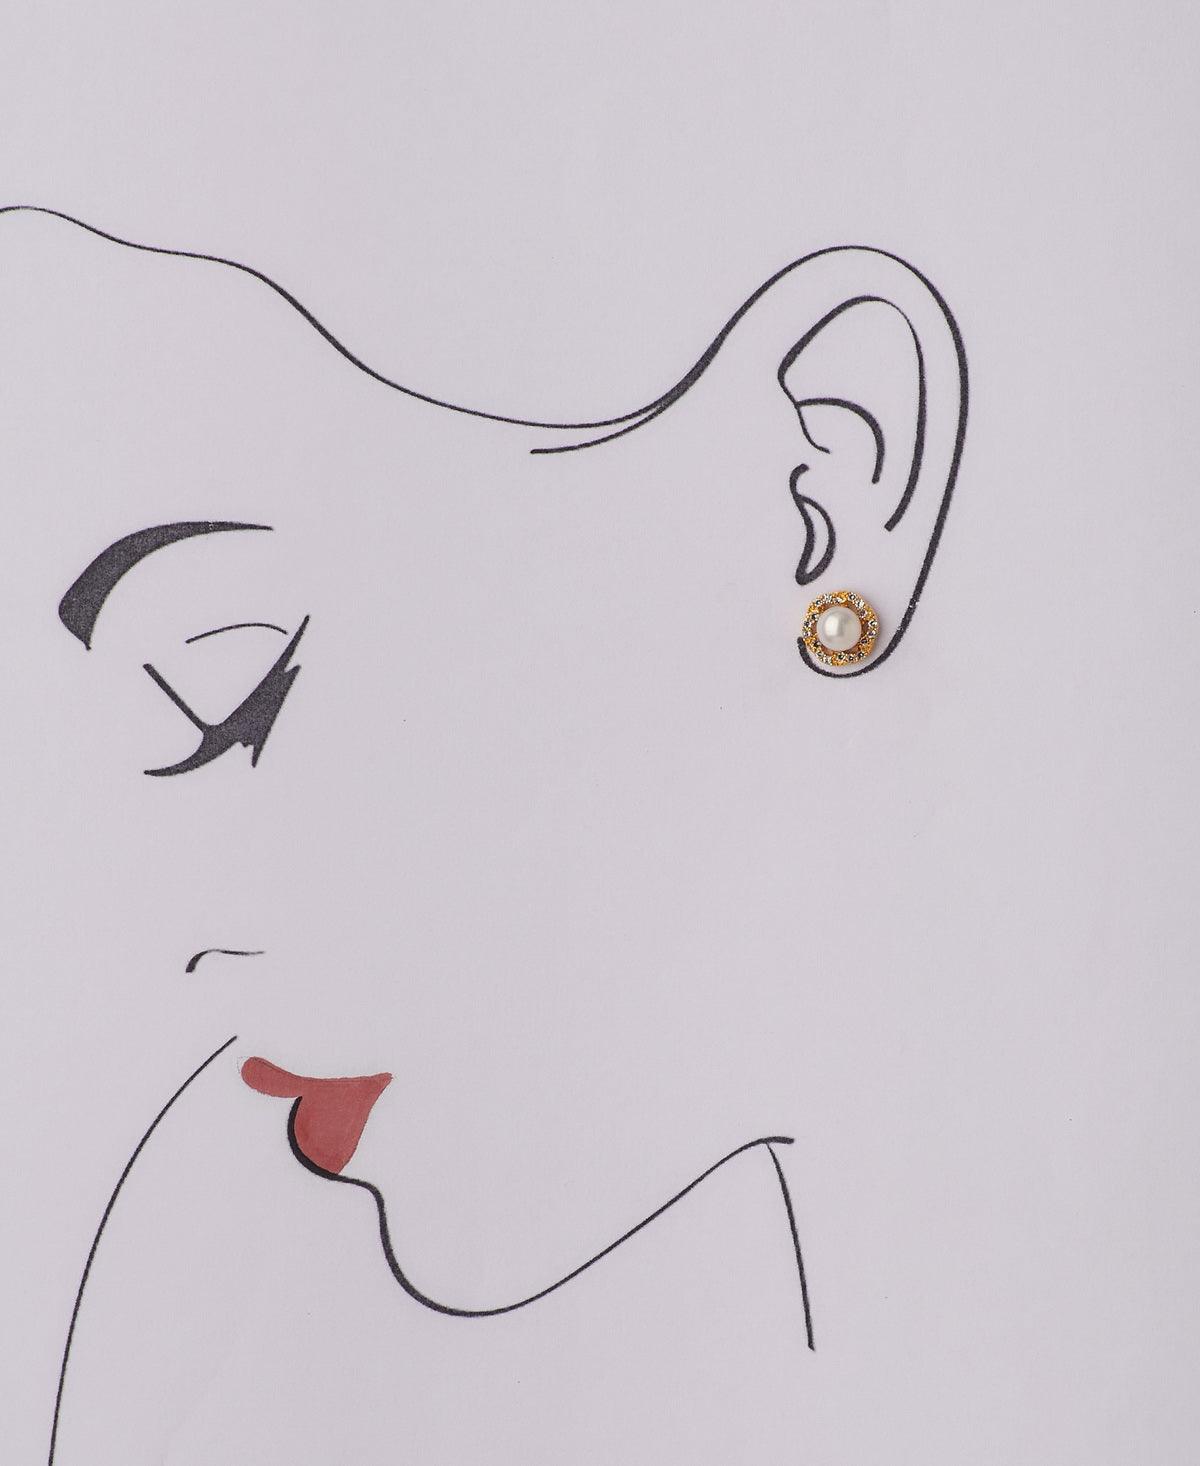 Sweet & Simple Pearl Stud Earring - Chandrani Pearls